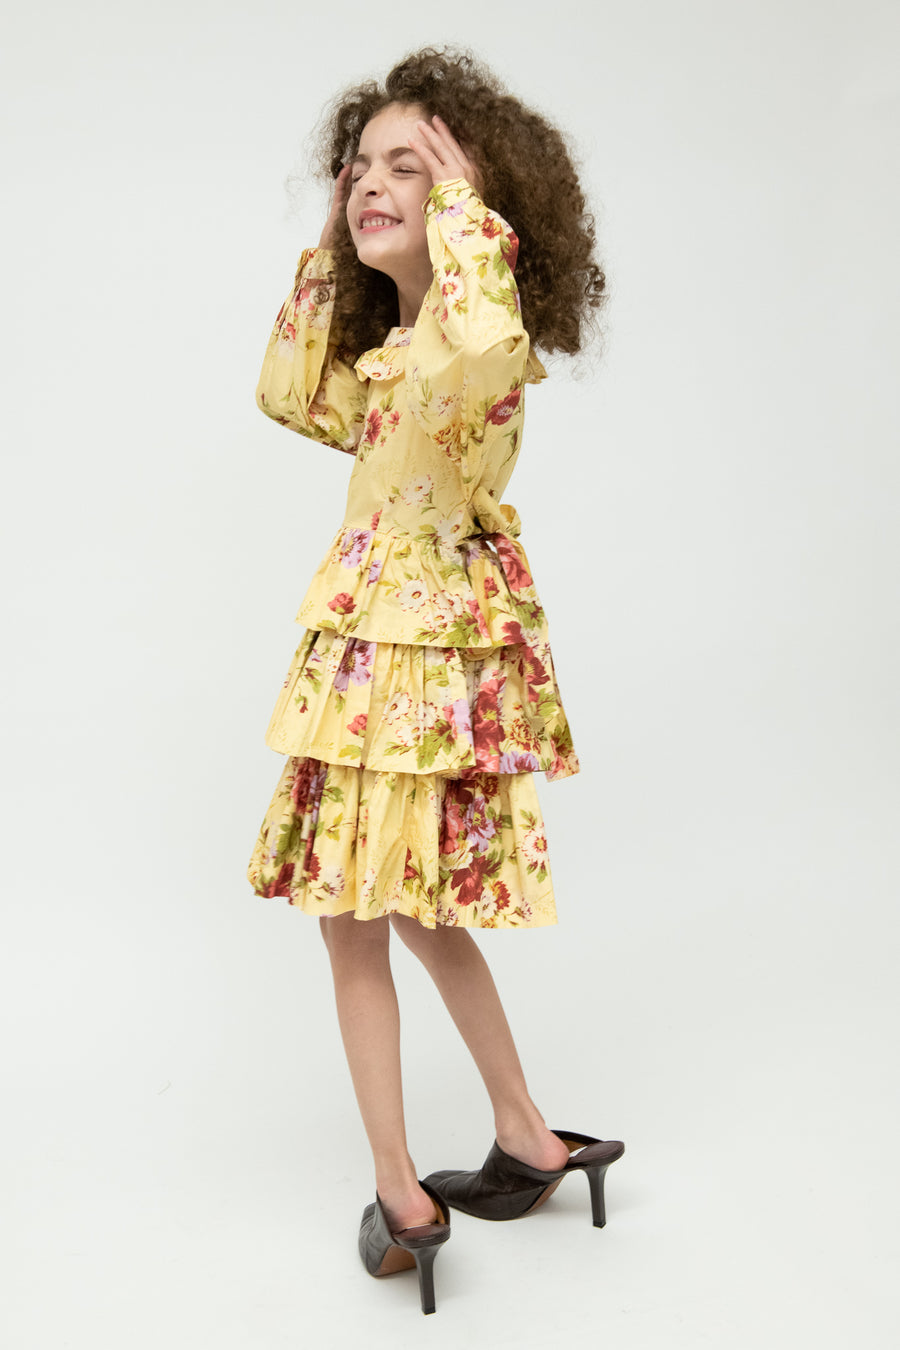 Laura Ashley x BATSHEVA Kid's Dress in Arundel